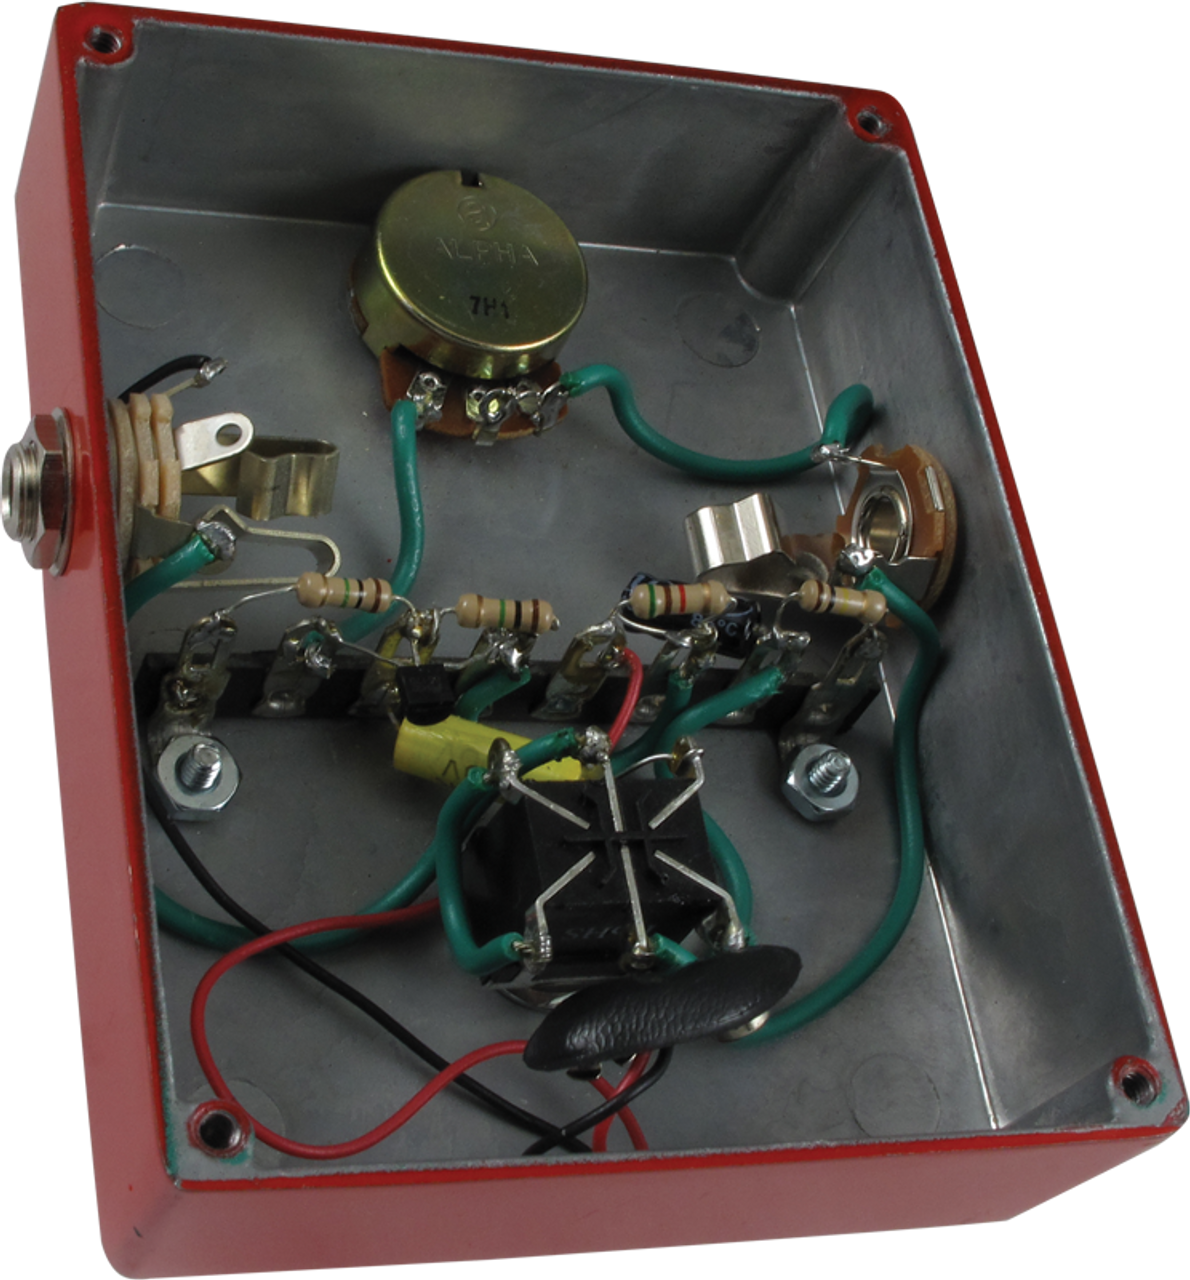 MOD Electronics Piledriver Power Boost Pedal DIY Kit